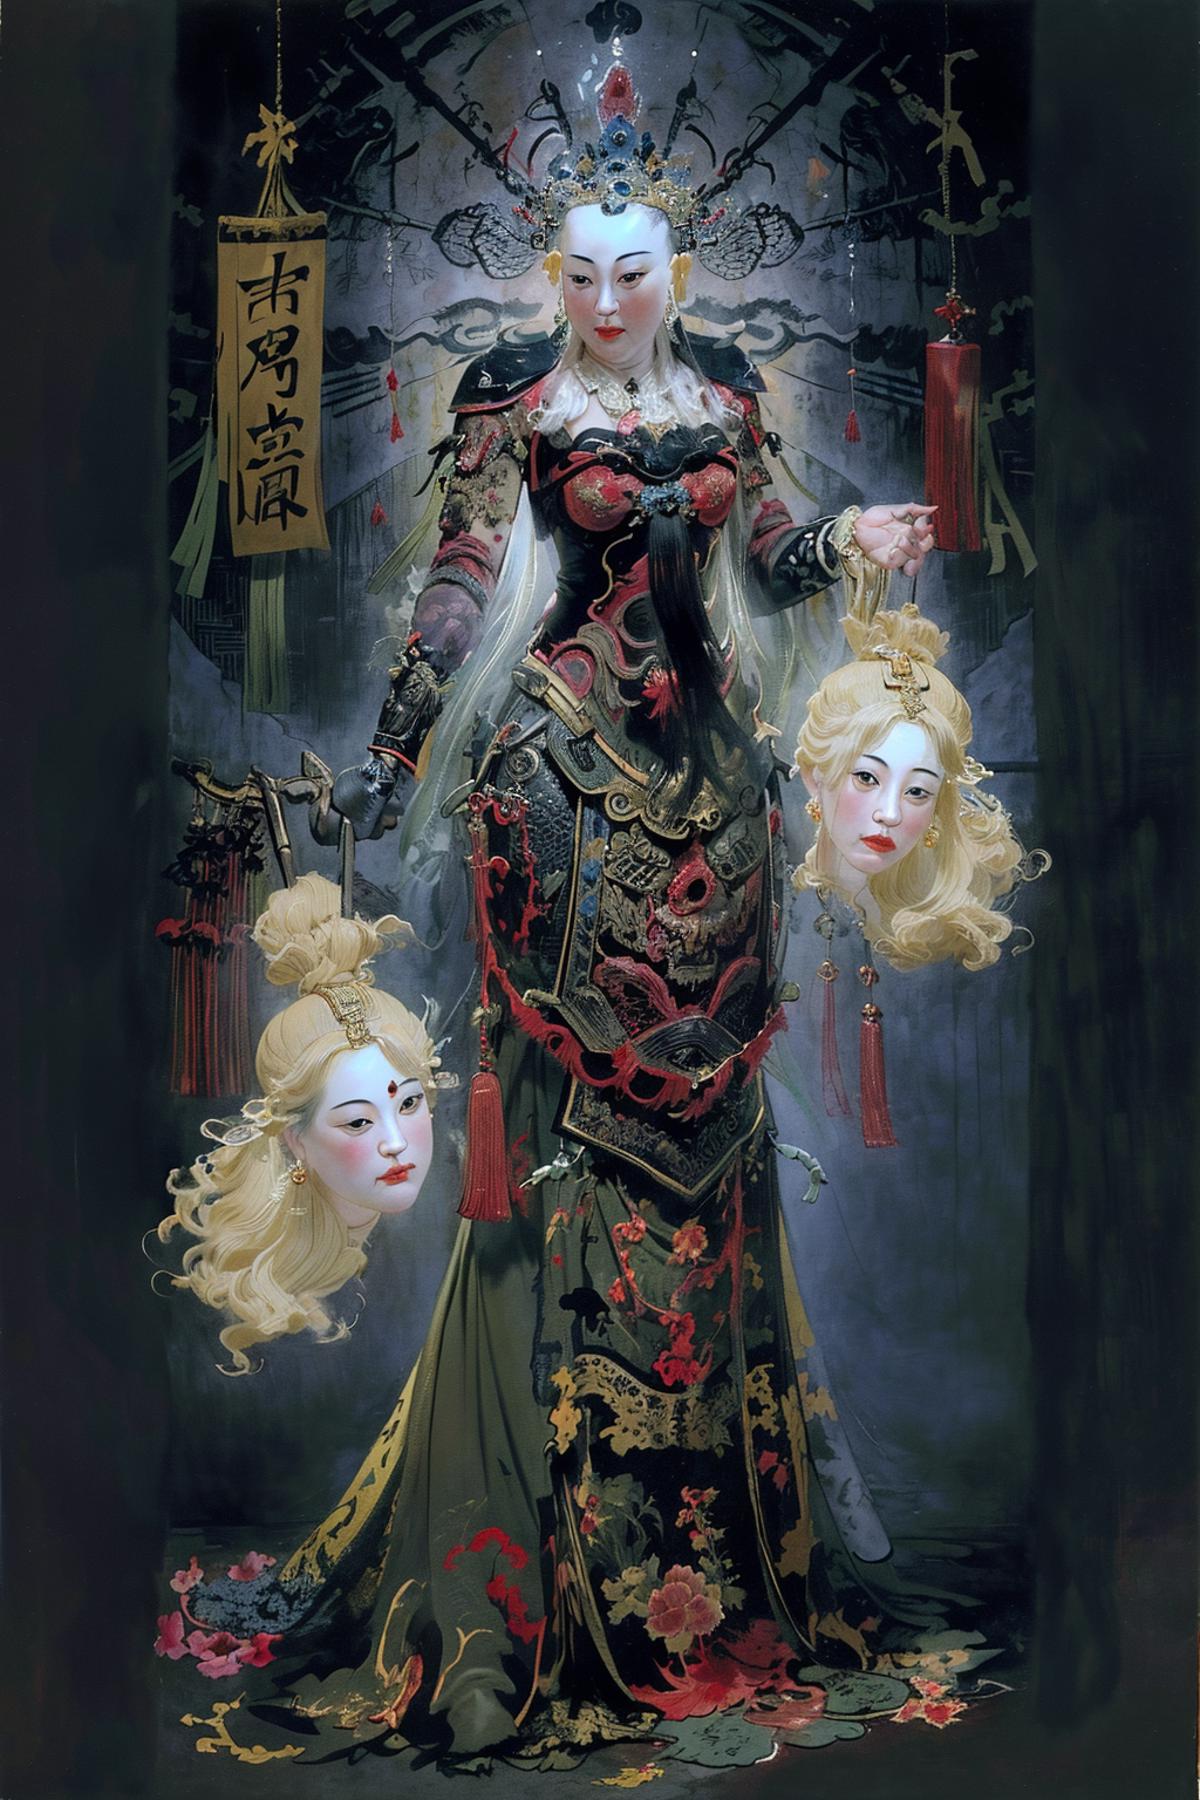 LEOSAM's 中国门神画风格 Chinese Traditional Door Gods Painting Style LoRA image by Merjic